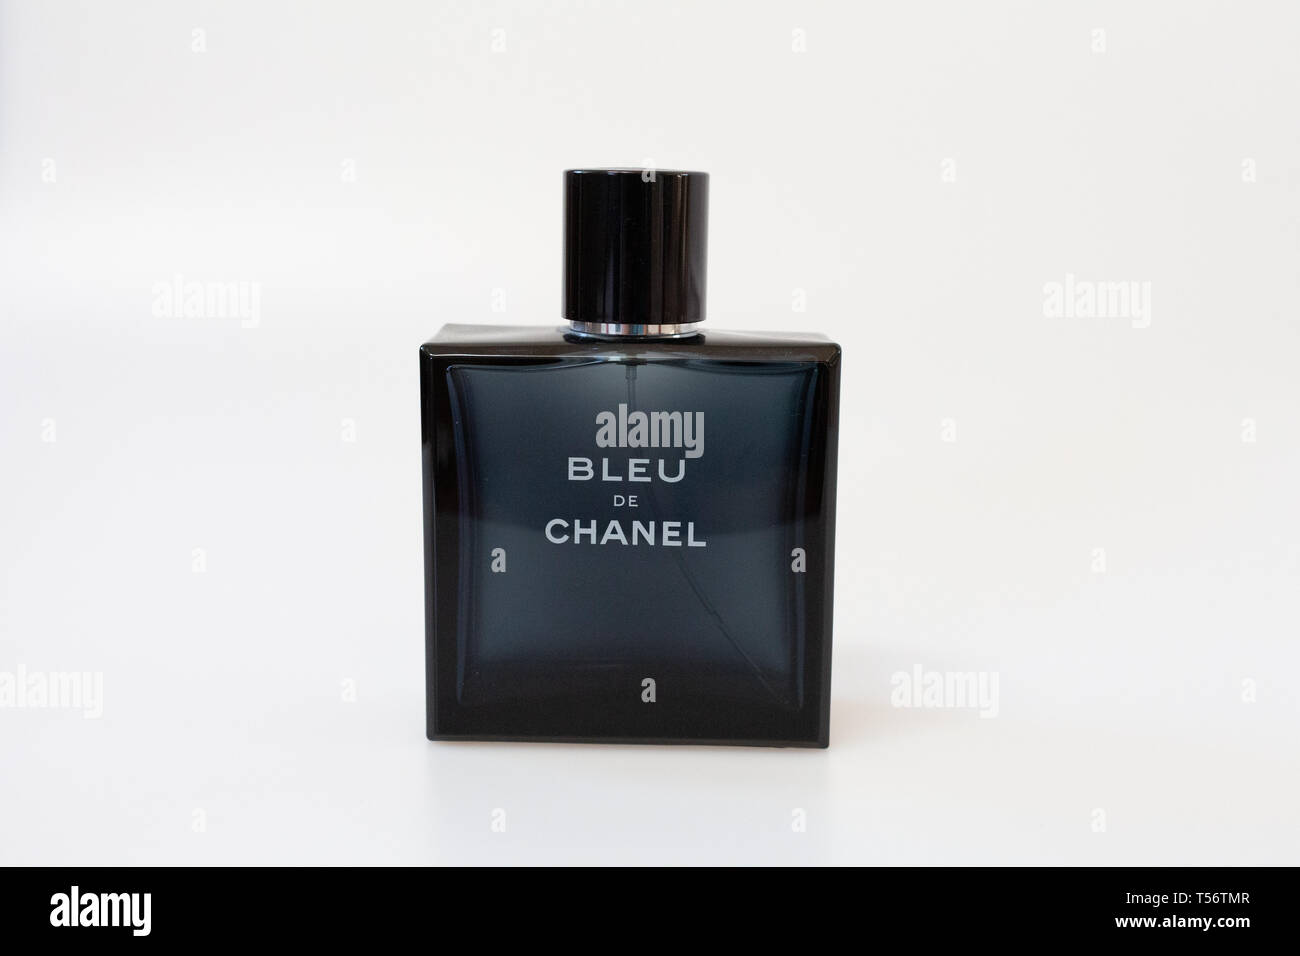 Bleu De Chanel perfume. editorial photo. Image of founded - 105307506